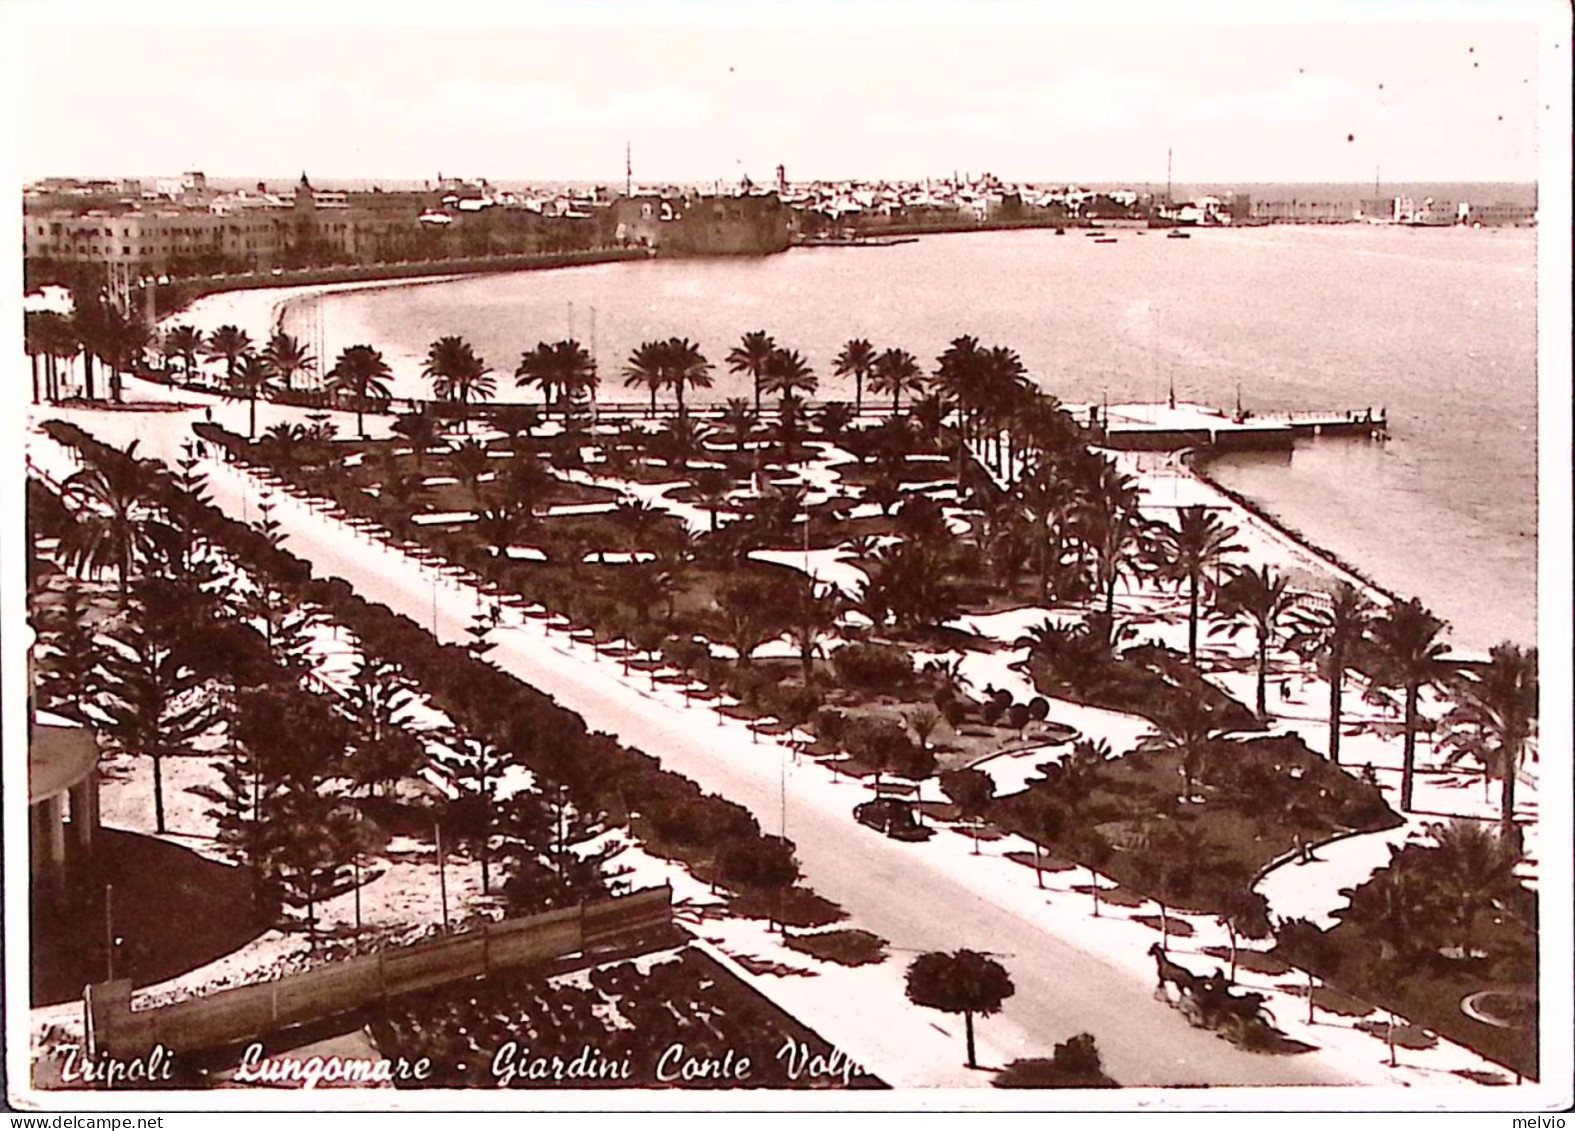 1942-LIBIA PA AUGUSTO C.50 + Ordinaria C.50 Su Cartolina (Tripoli Giardino Conte - Libyen